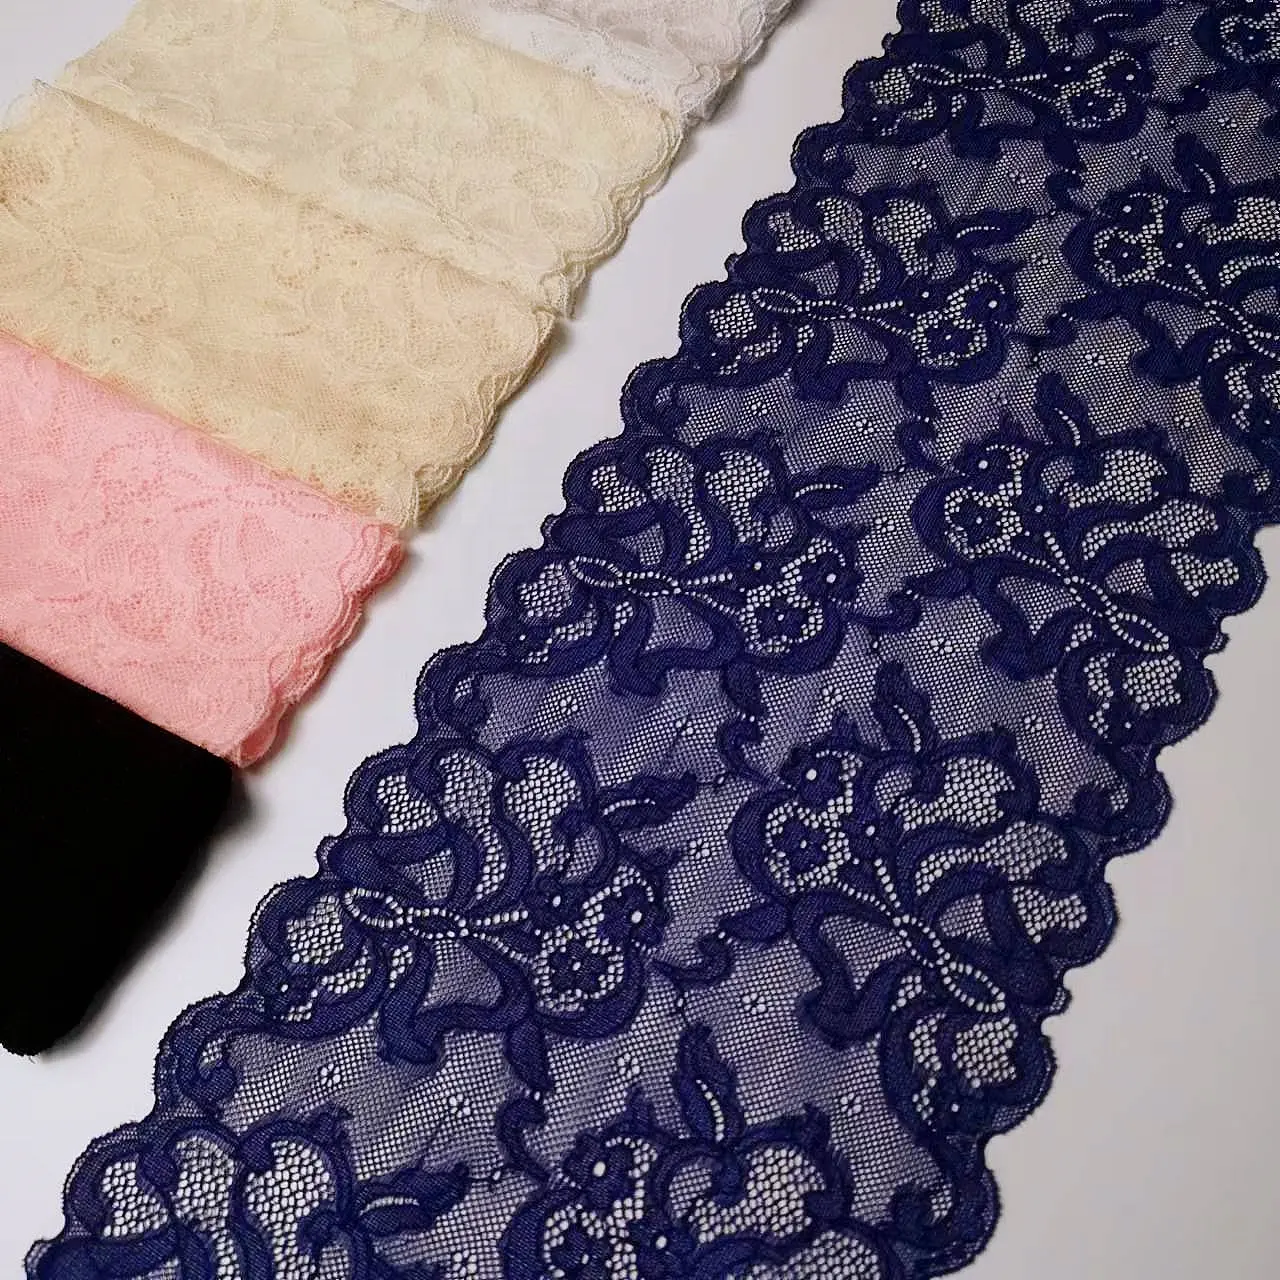 057022-1 Hot Sale 20cm Width Colorful Stretch Elastic Lace Trim Fabric For Dress